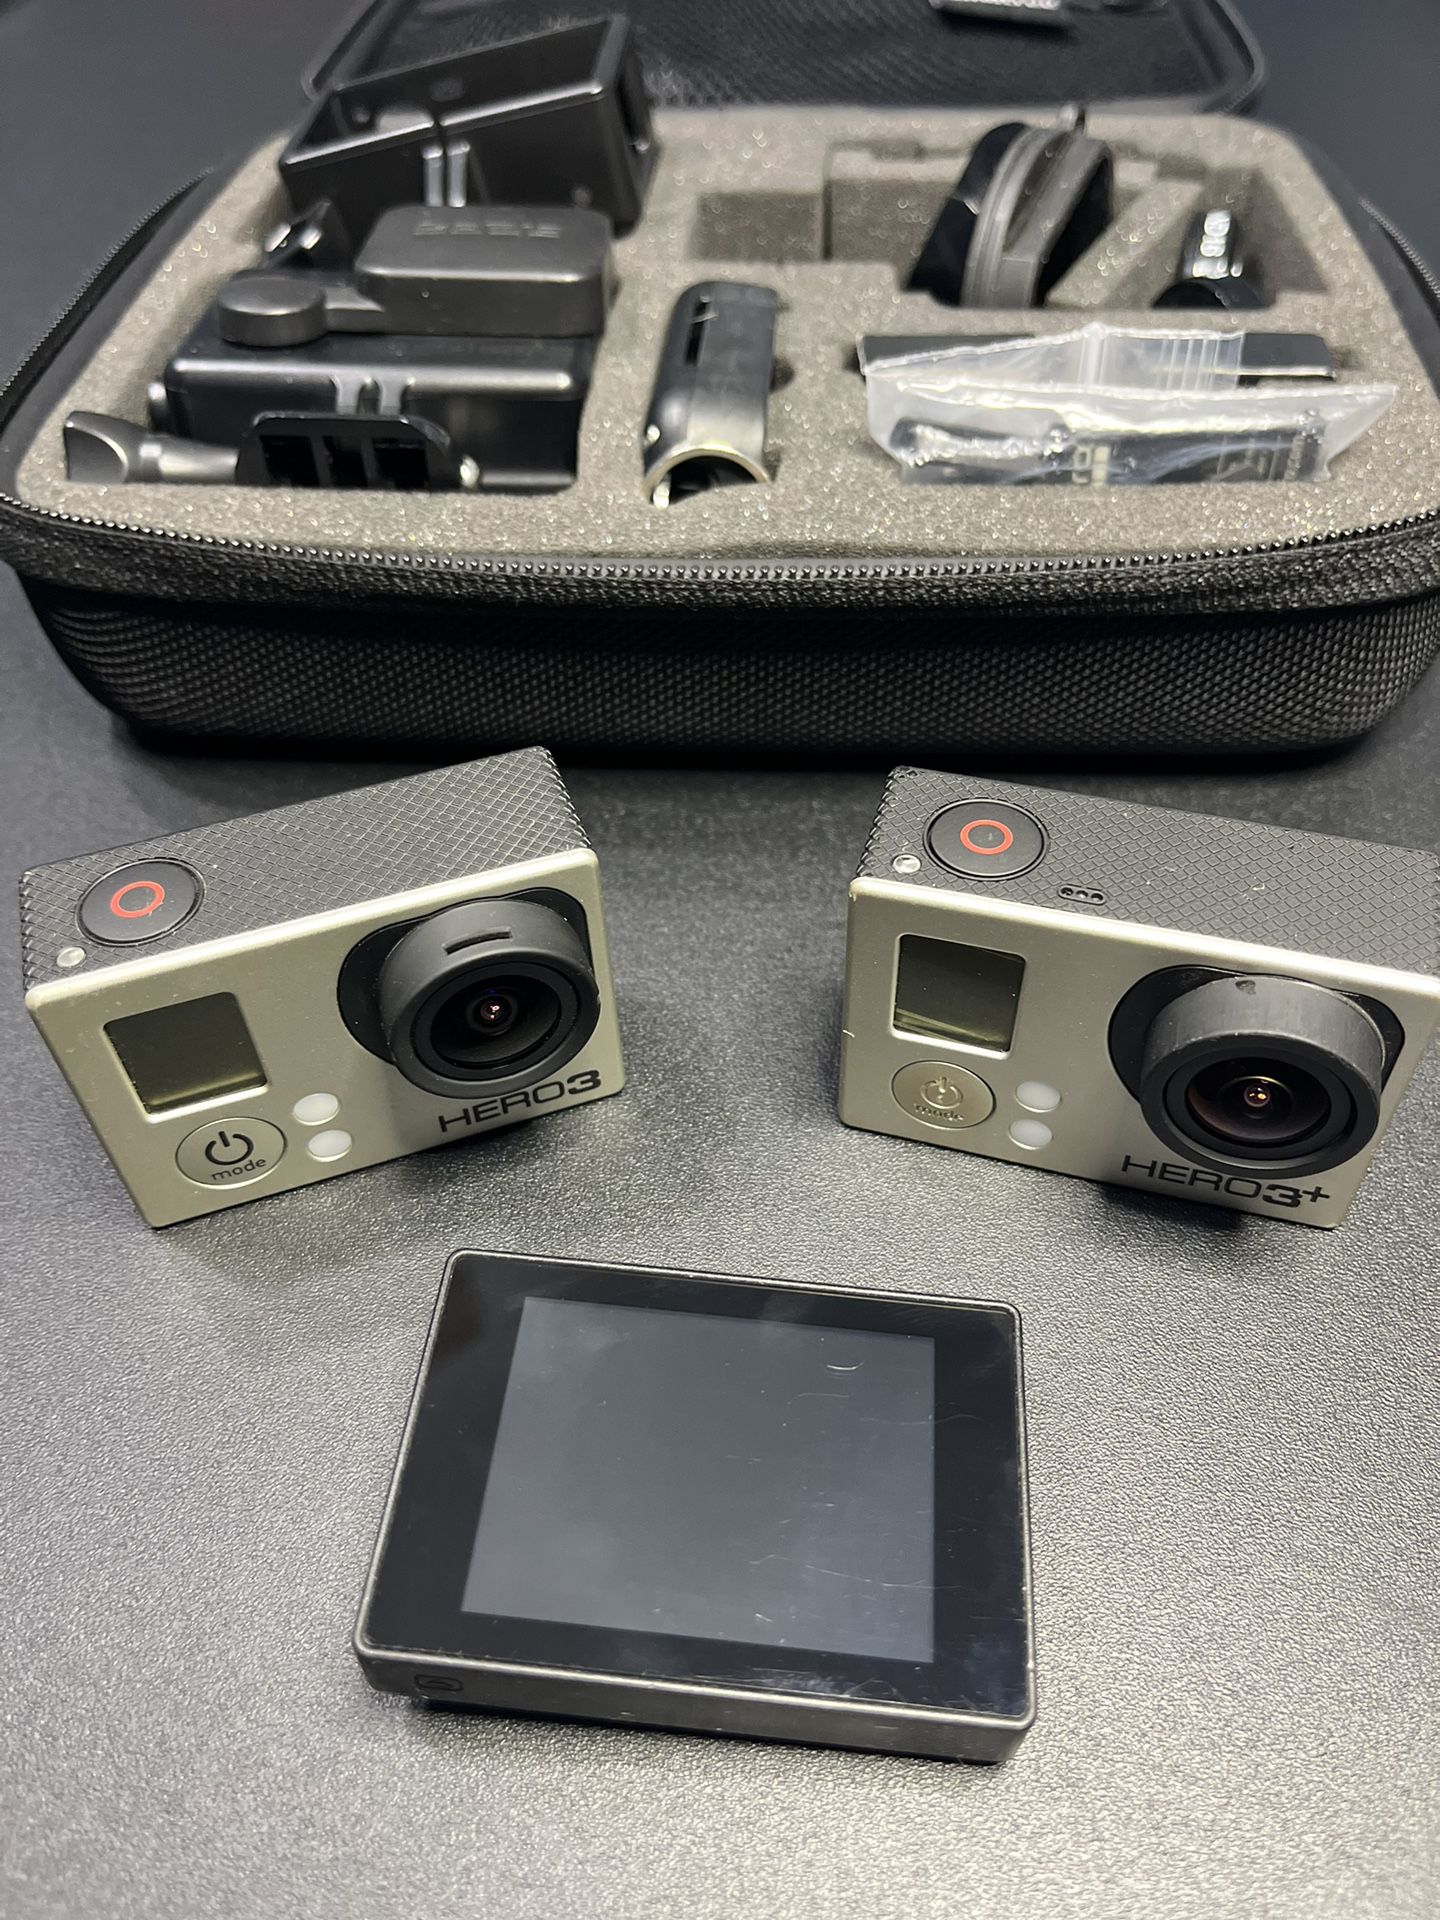 Two GoPro Hero 3+ Black Action Cameras Professional Set